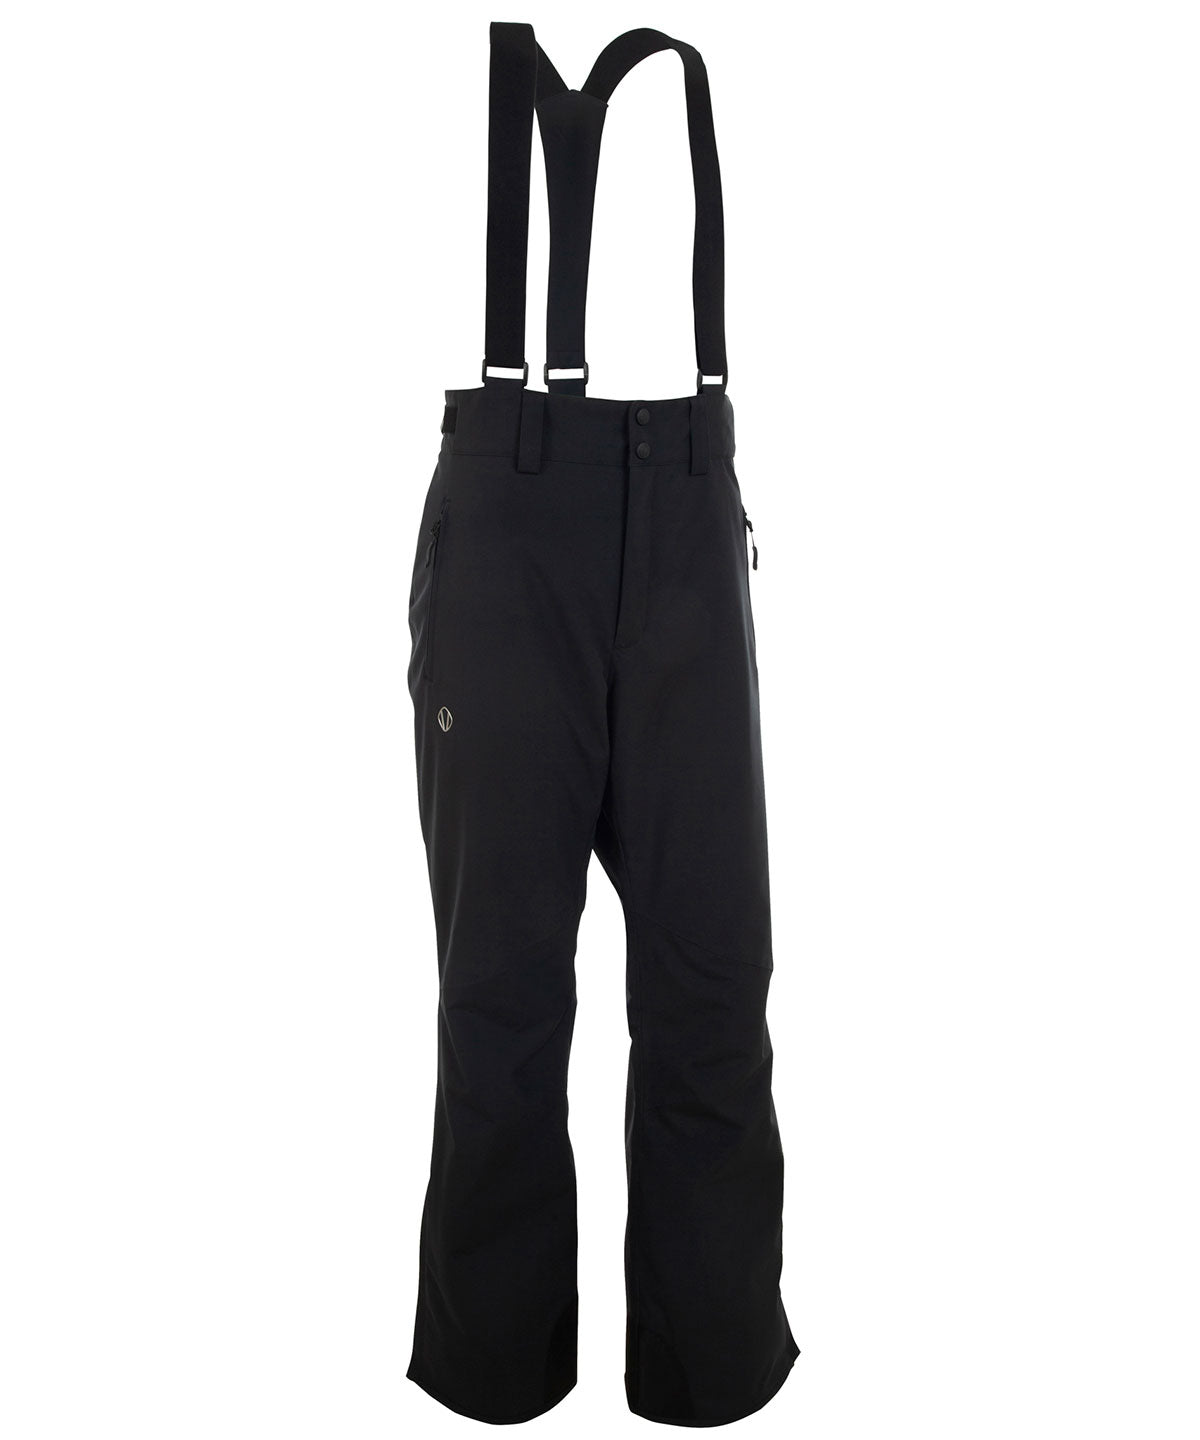 NoSaggs Hidden BELT Pant Suspender for Men - Keep Pants Up Without